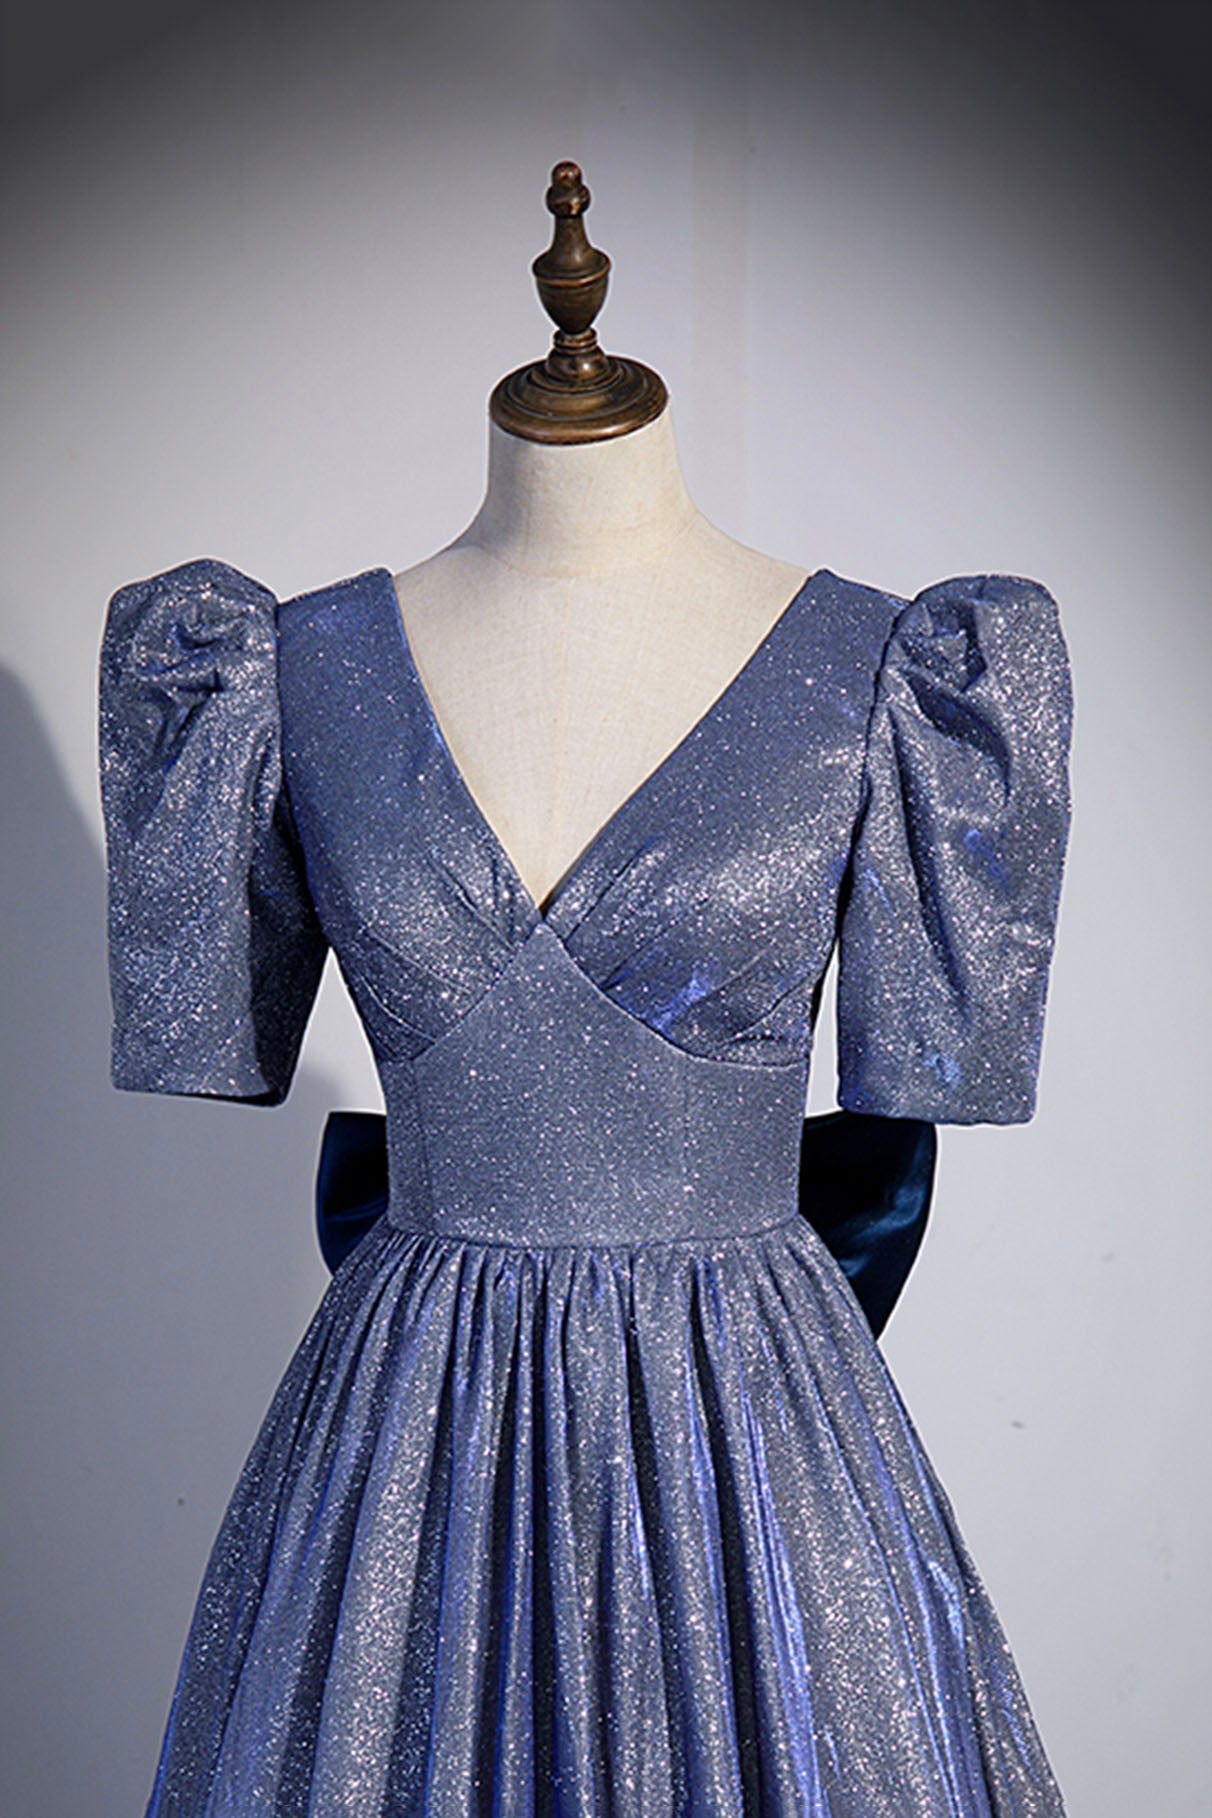 Homecoming Dress Short, Blue Long A-Line Prom Dress, Simple V-Neck Short Sleeve Evening Dress